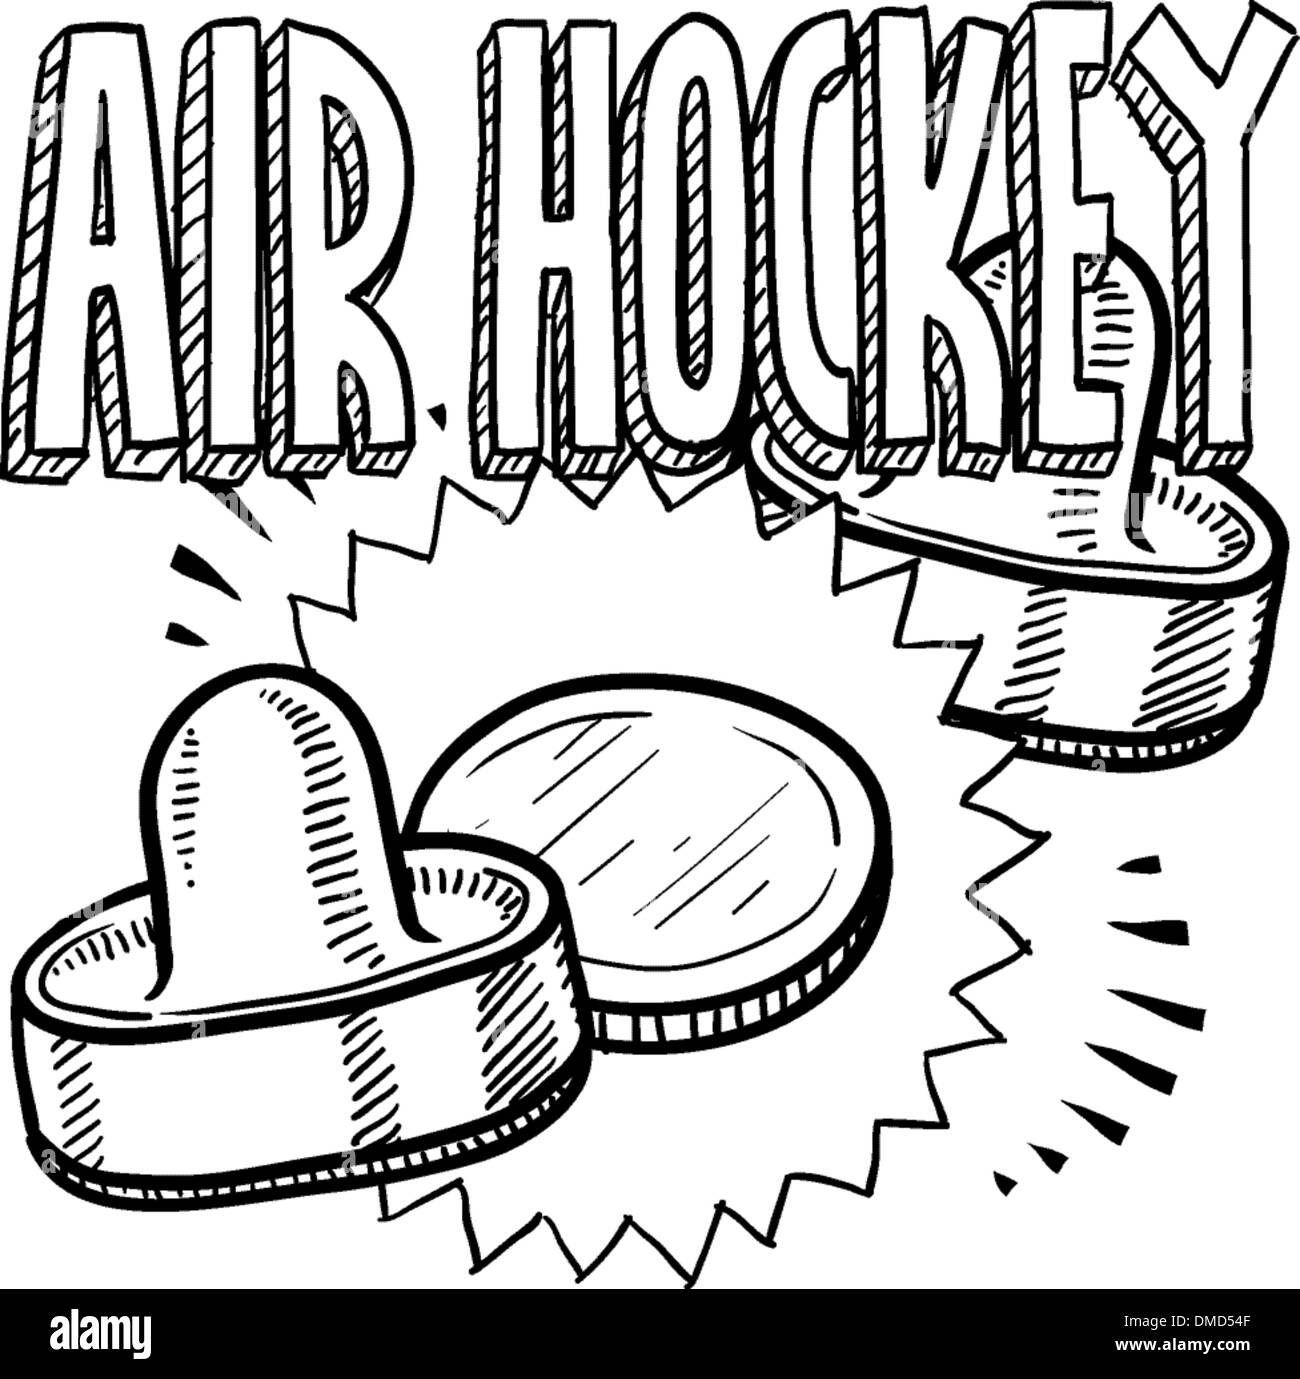 Croquis de air hockey Illustration de Vecteur